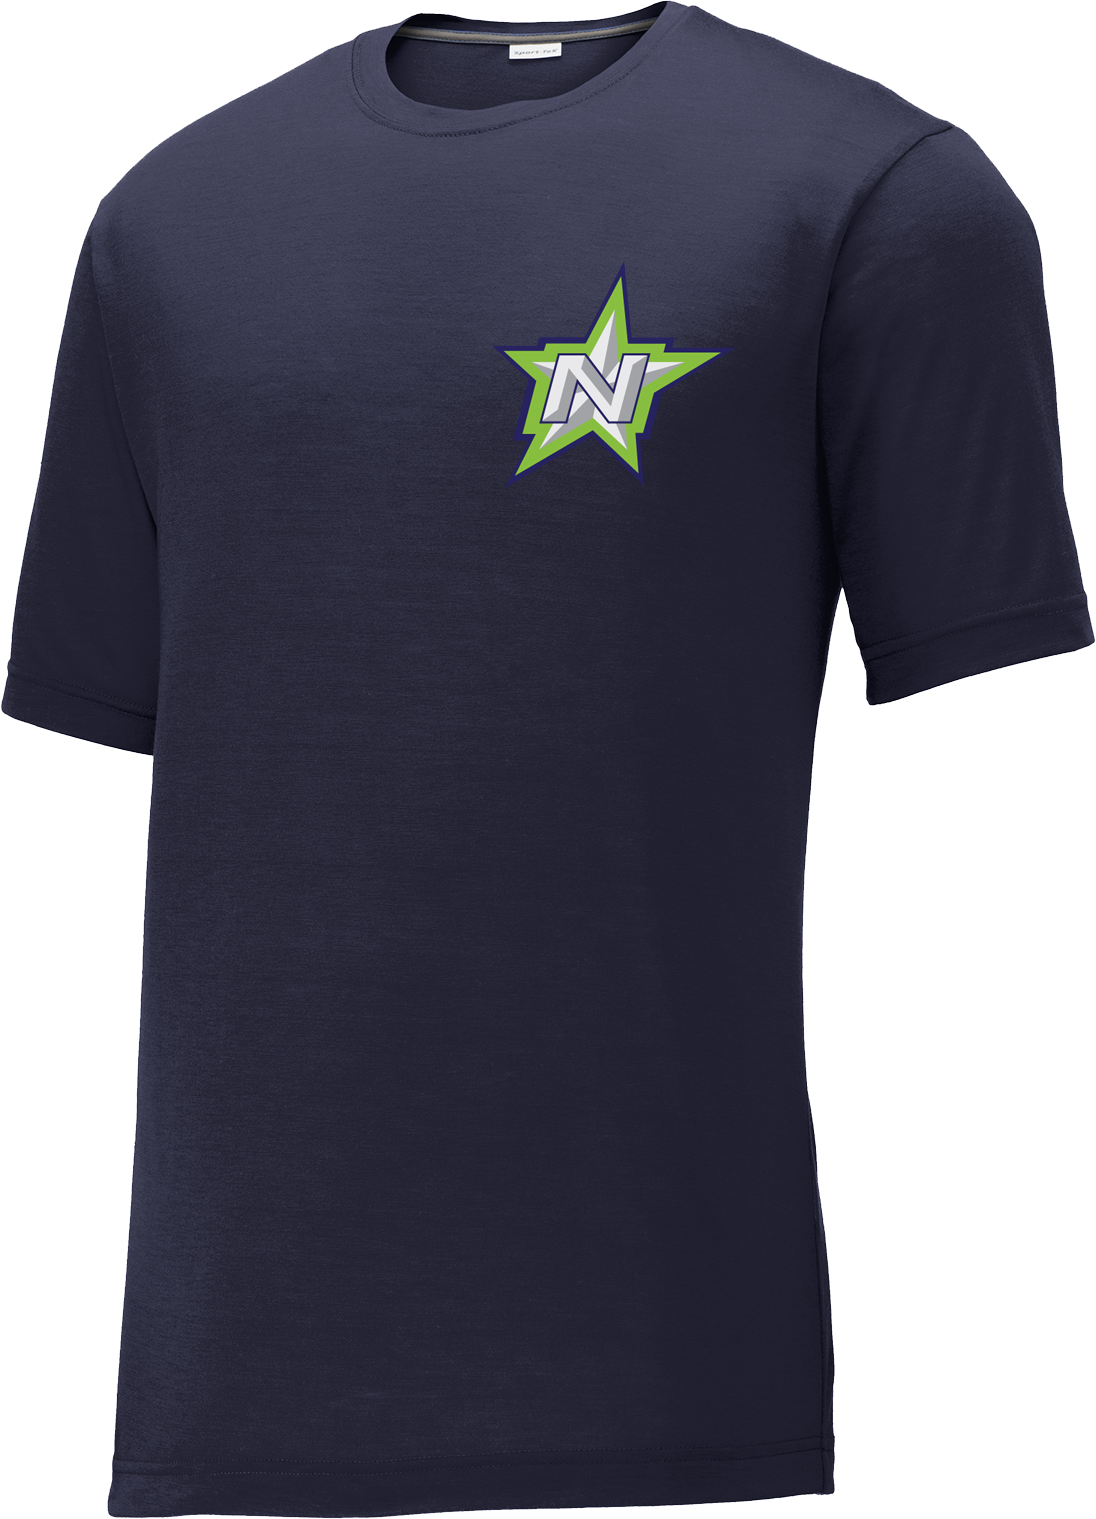 Northstar Baseball Men's Navy CottonTouch Performance T-Shirt